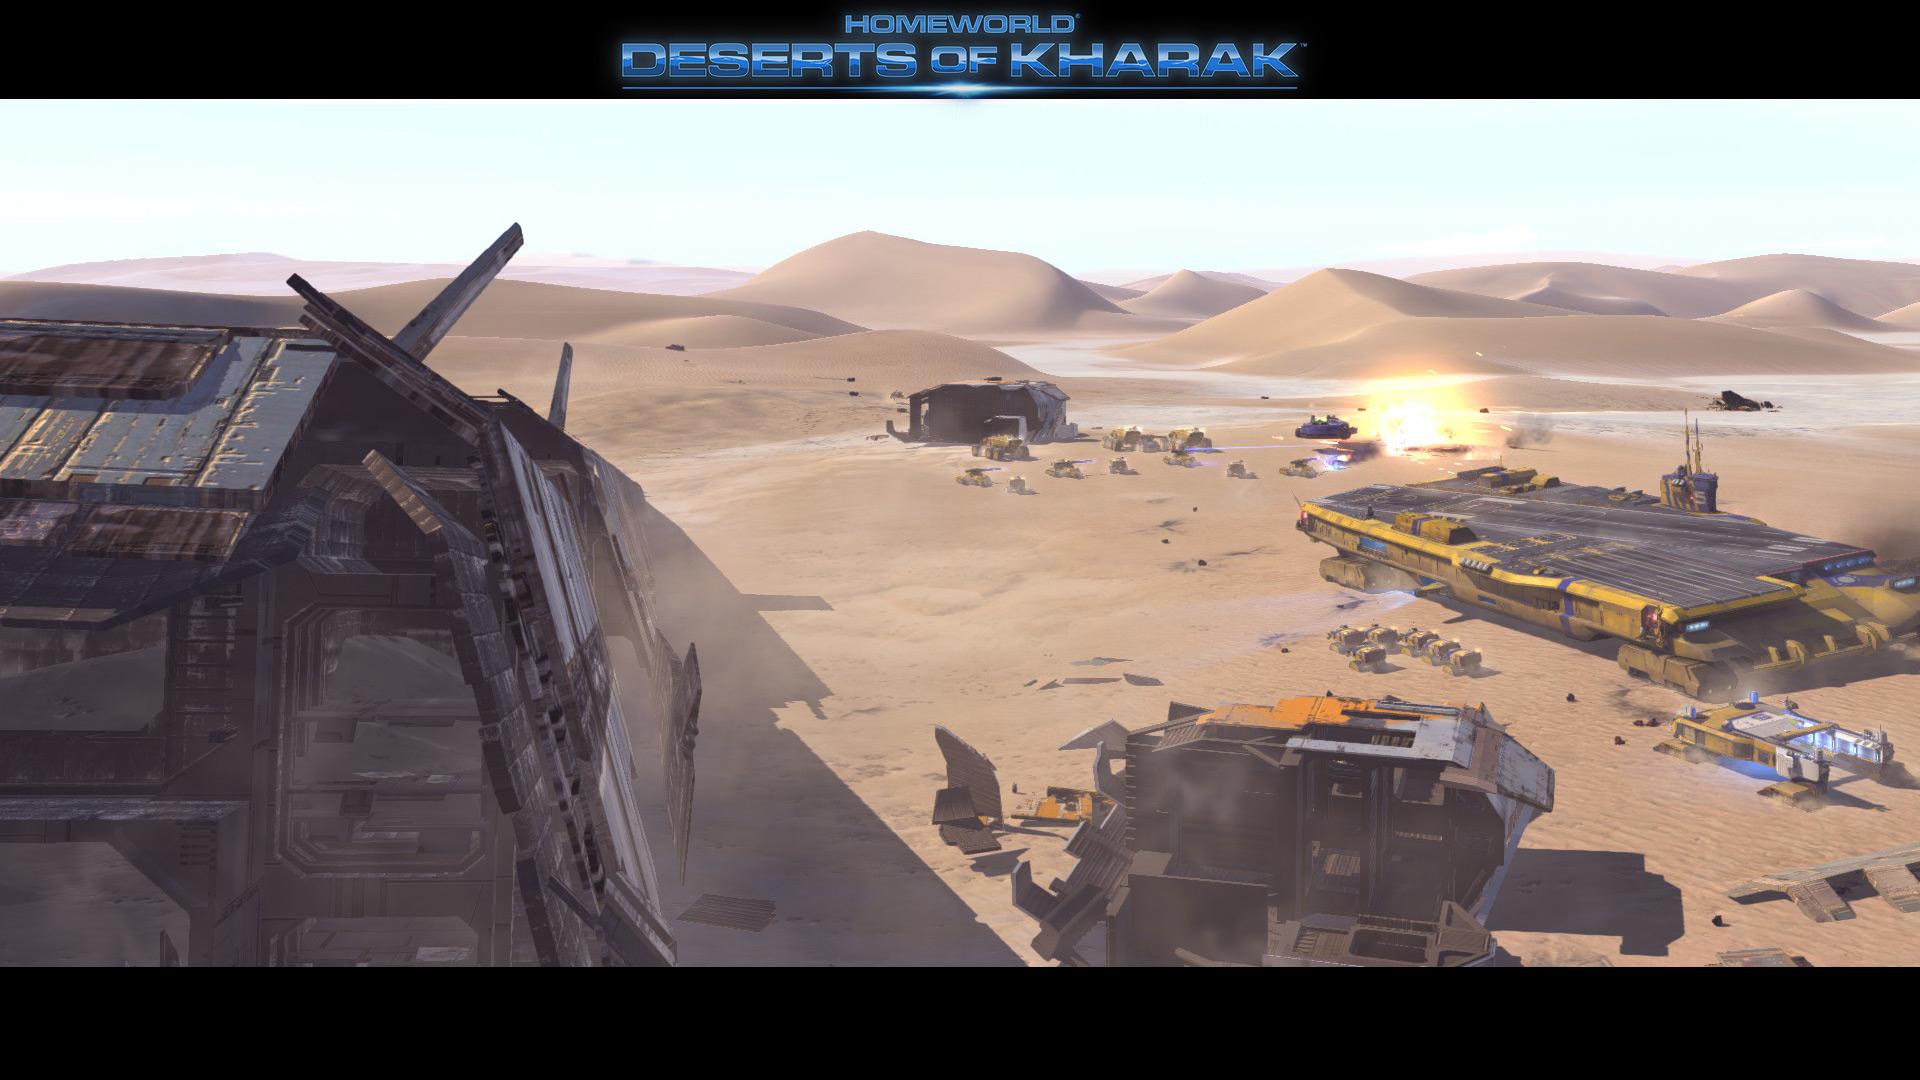 Homeworld Deserts Of Kharak at 1600 x 1200 size wallpapers HD quality